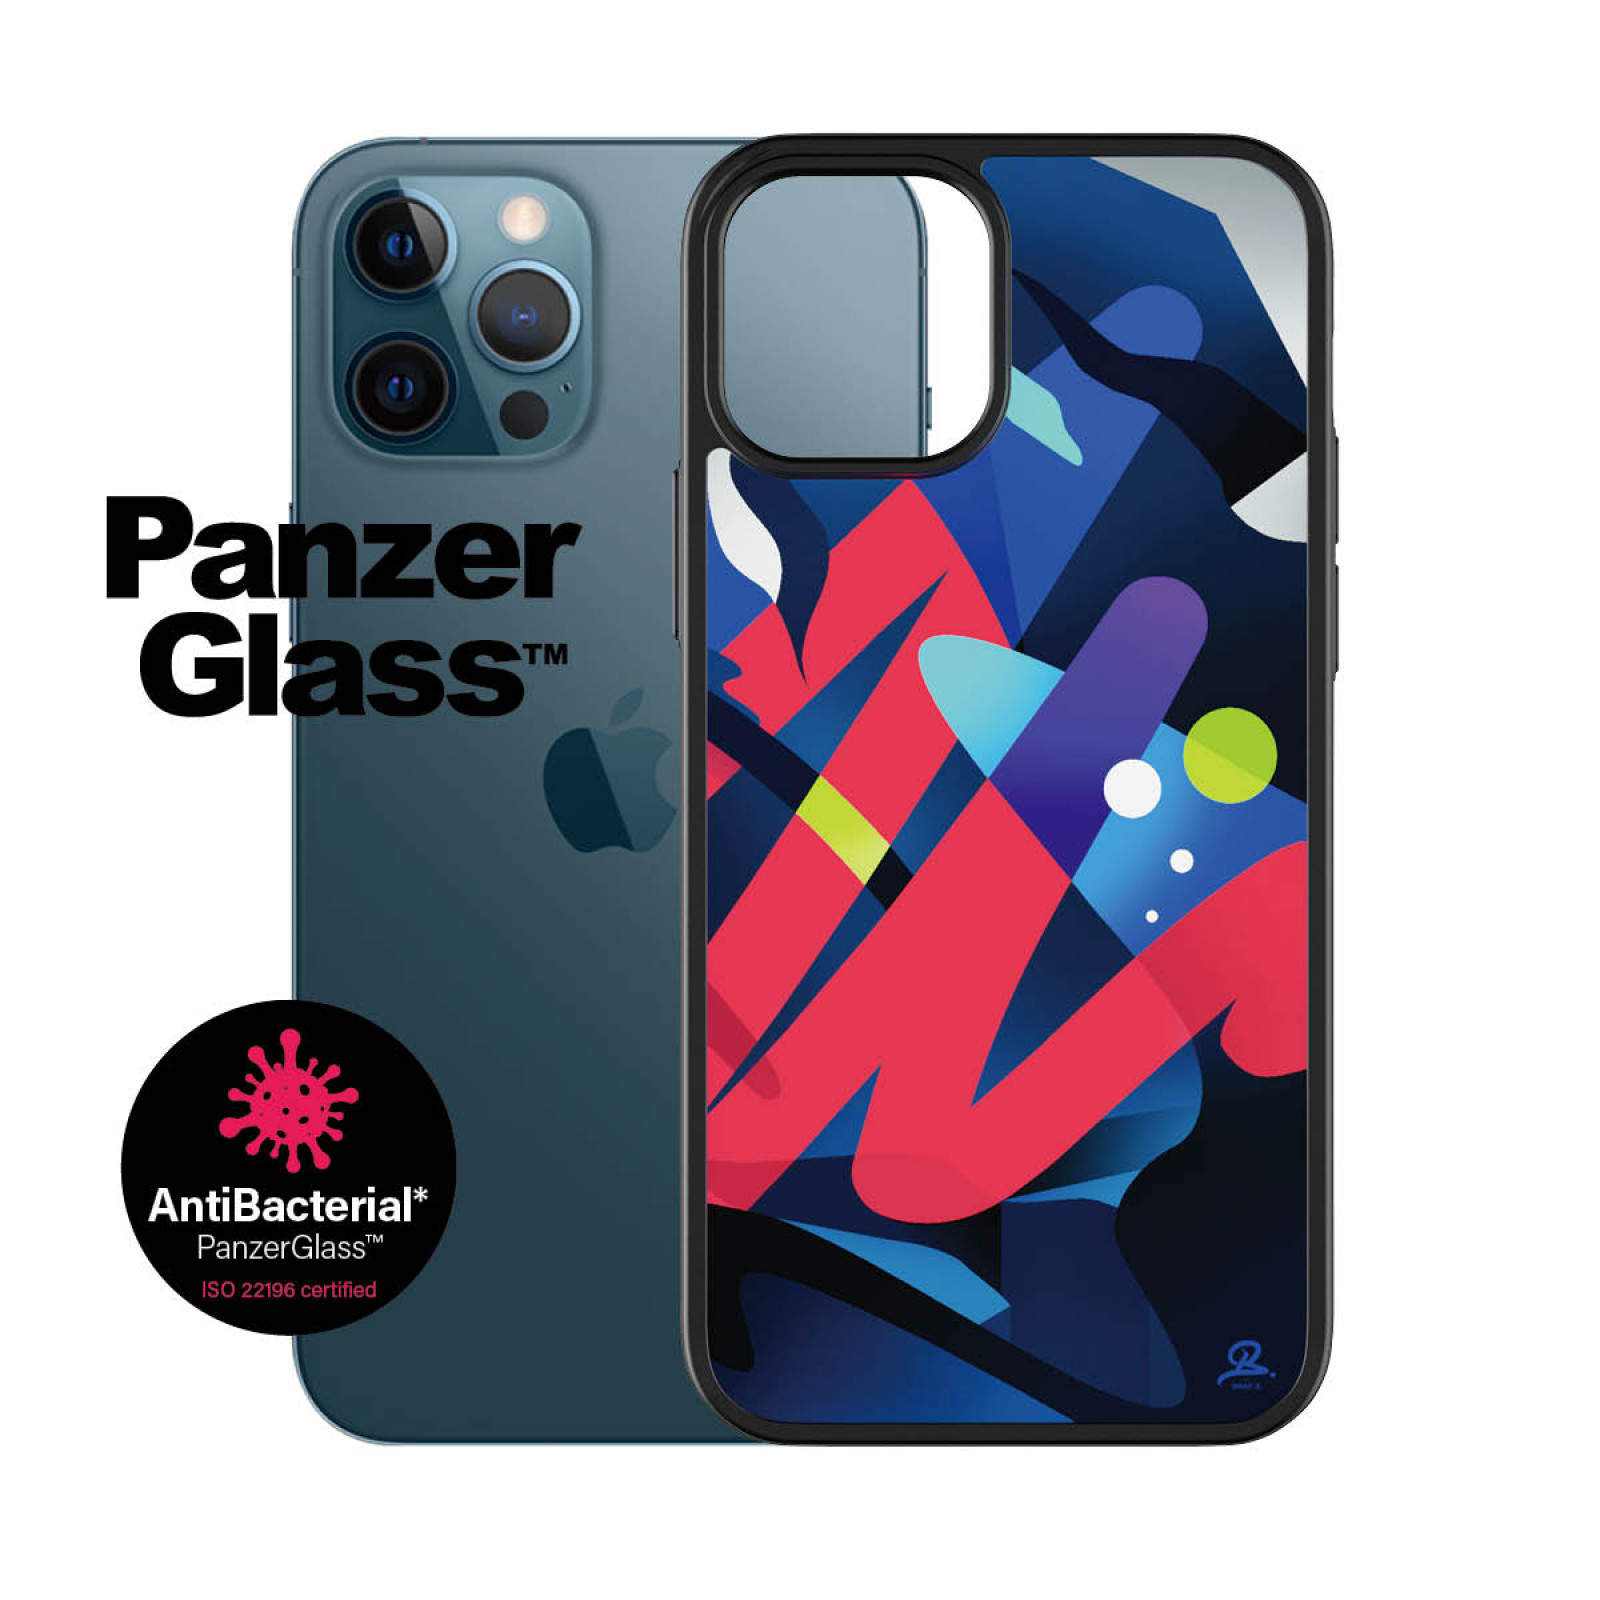 Гръб PanzerGlass Artist Edition ClearCase за Iphone 12 Pro Max - Цветен